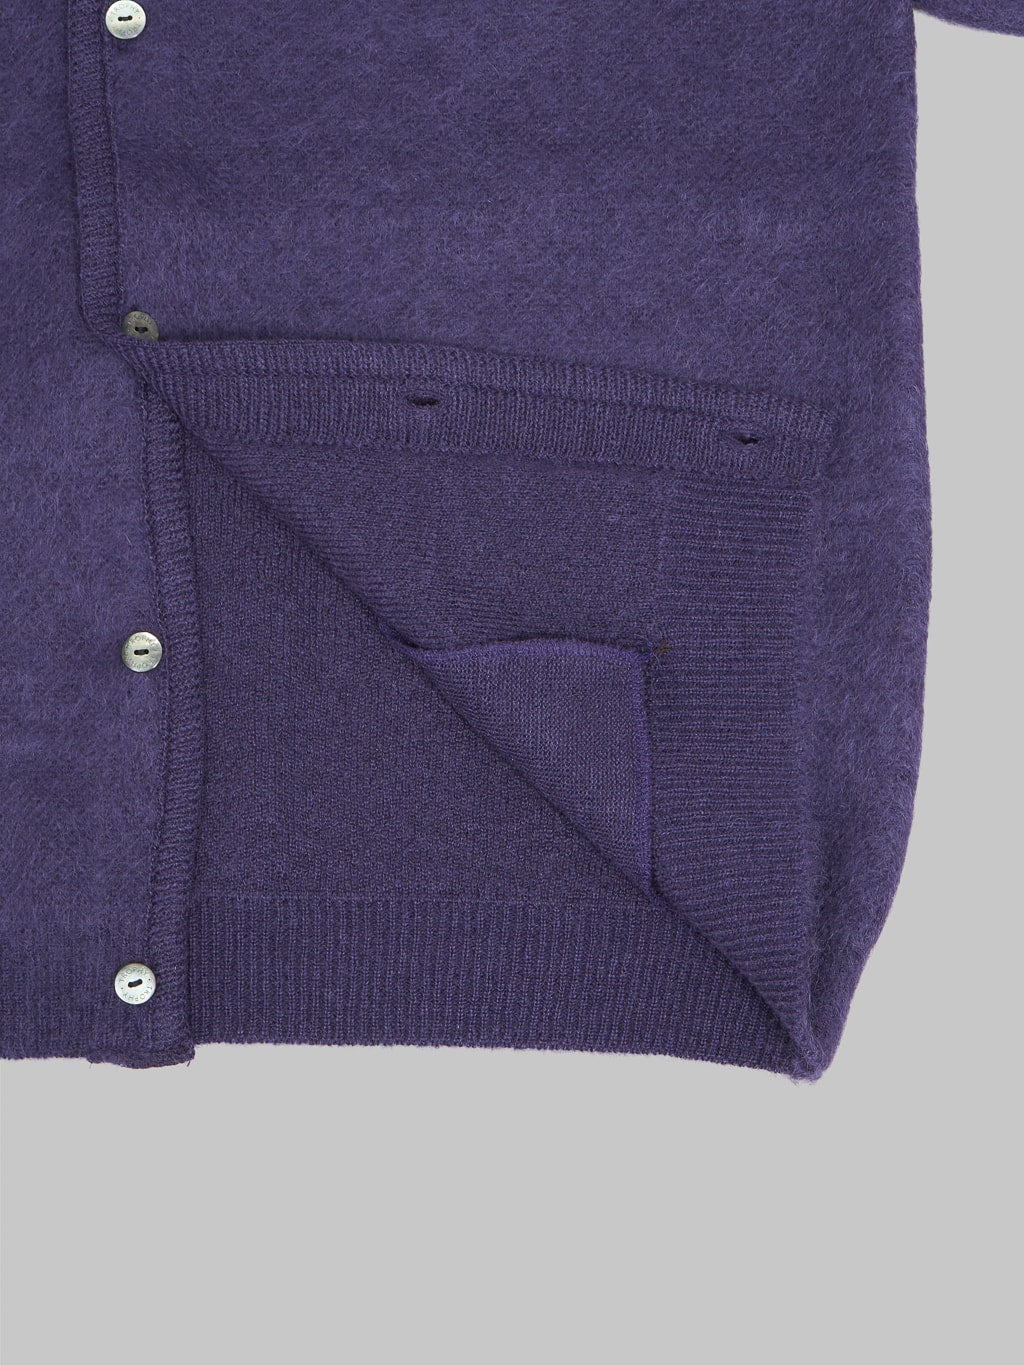 Trophy Clothing Mohair Knit Cardigan Dark Purple interior